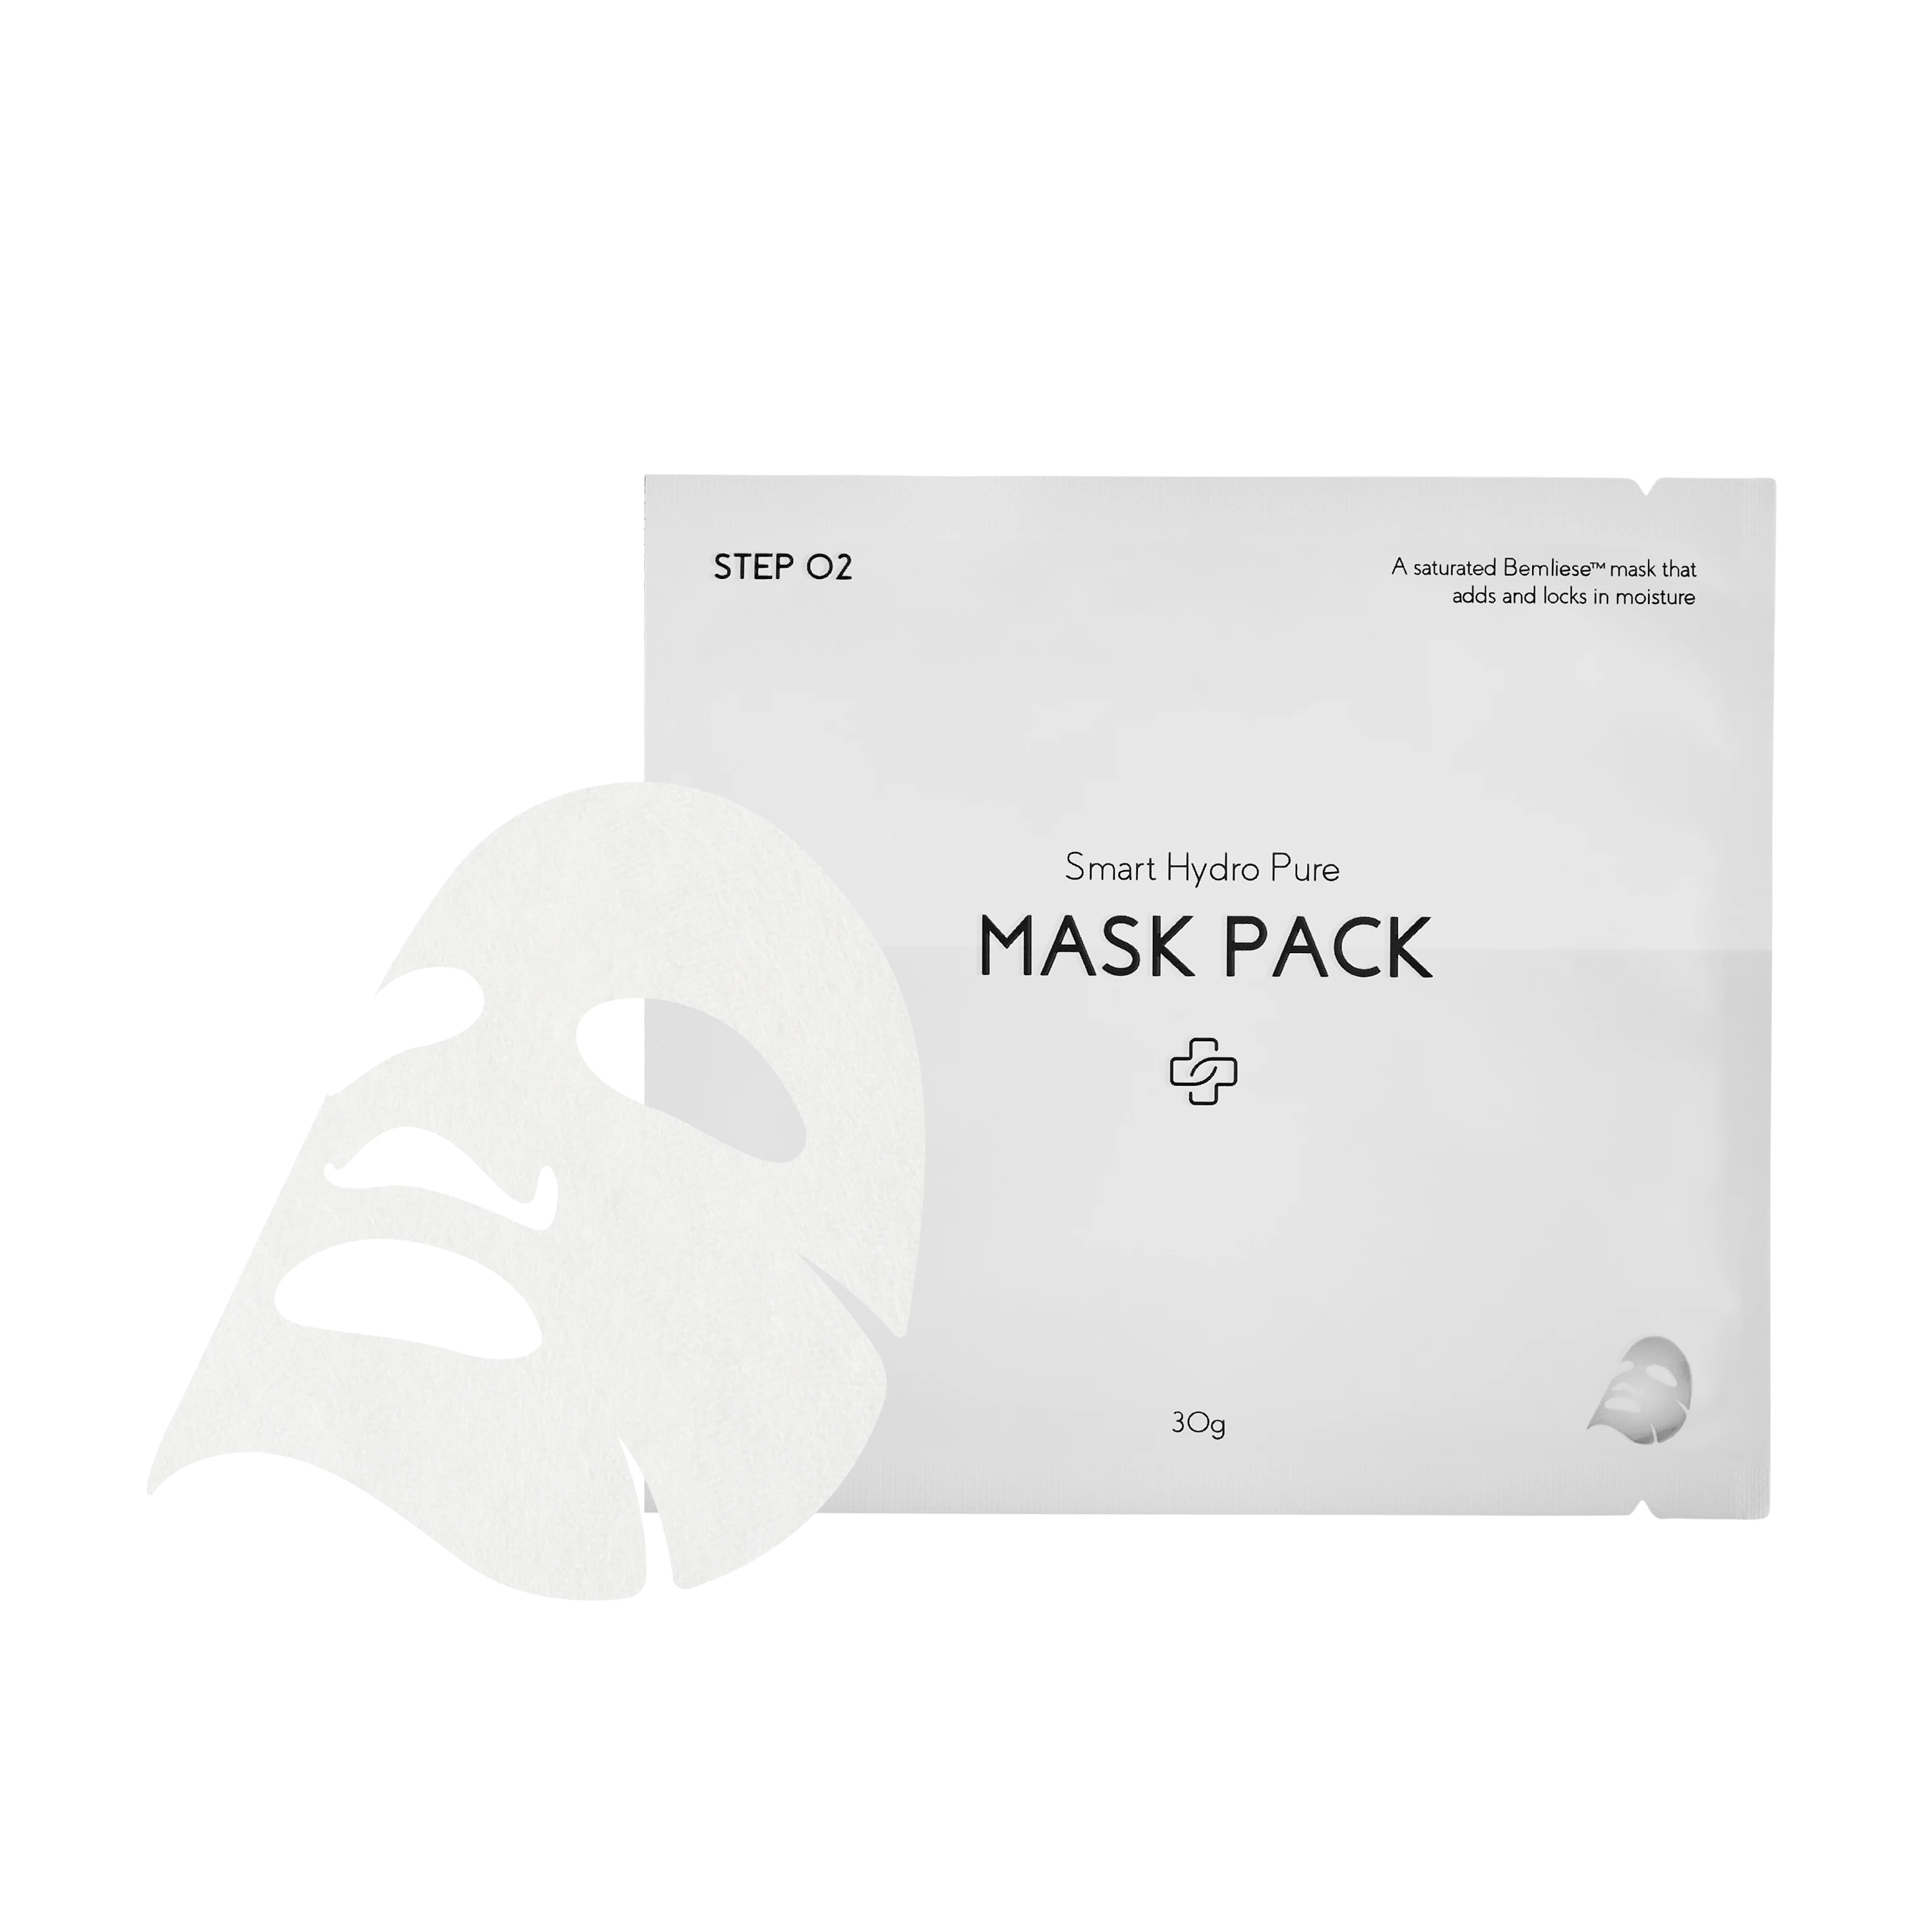 Collagen rich mask patch and moisture locked Korean Facial Mask Sheet